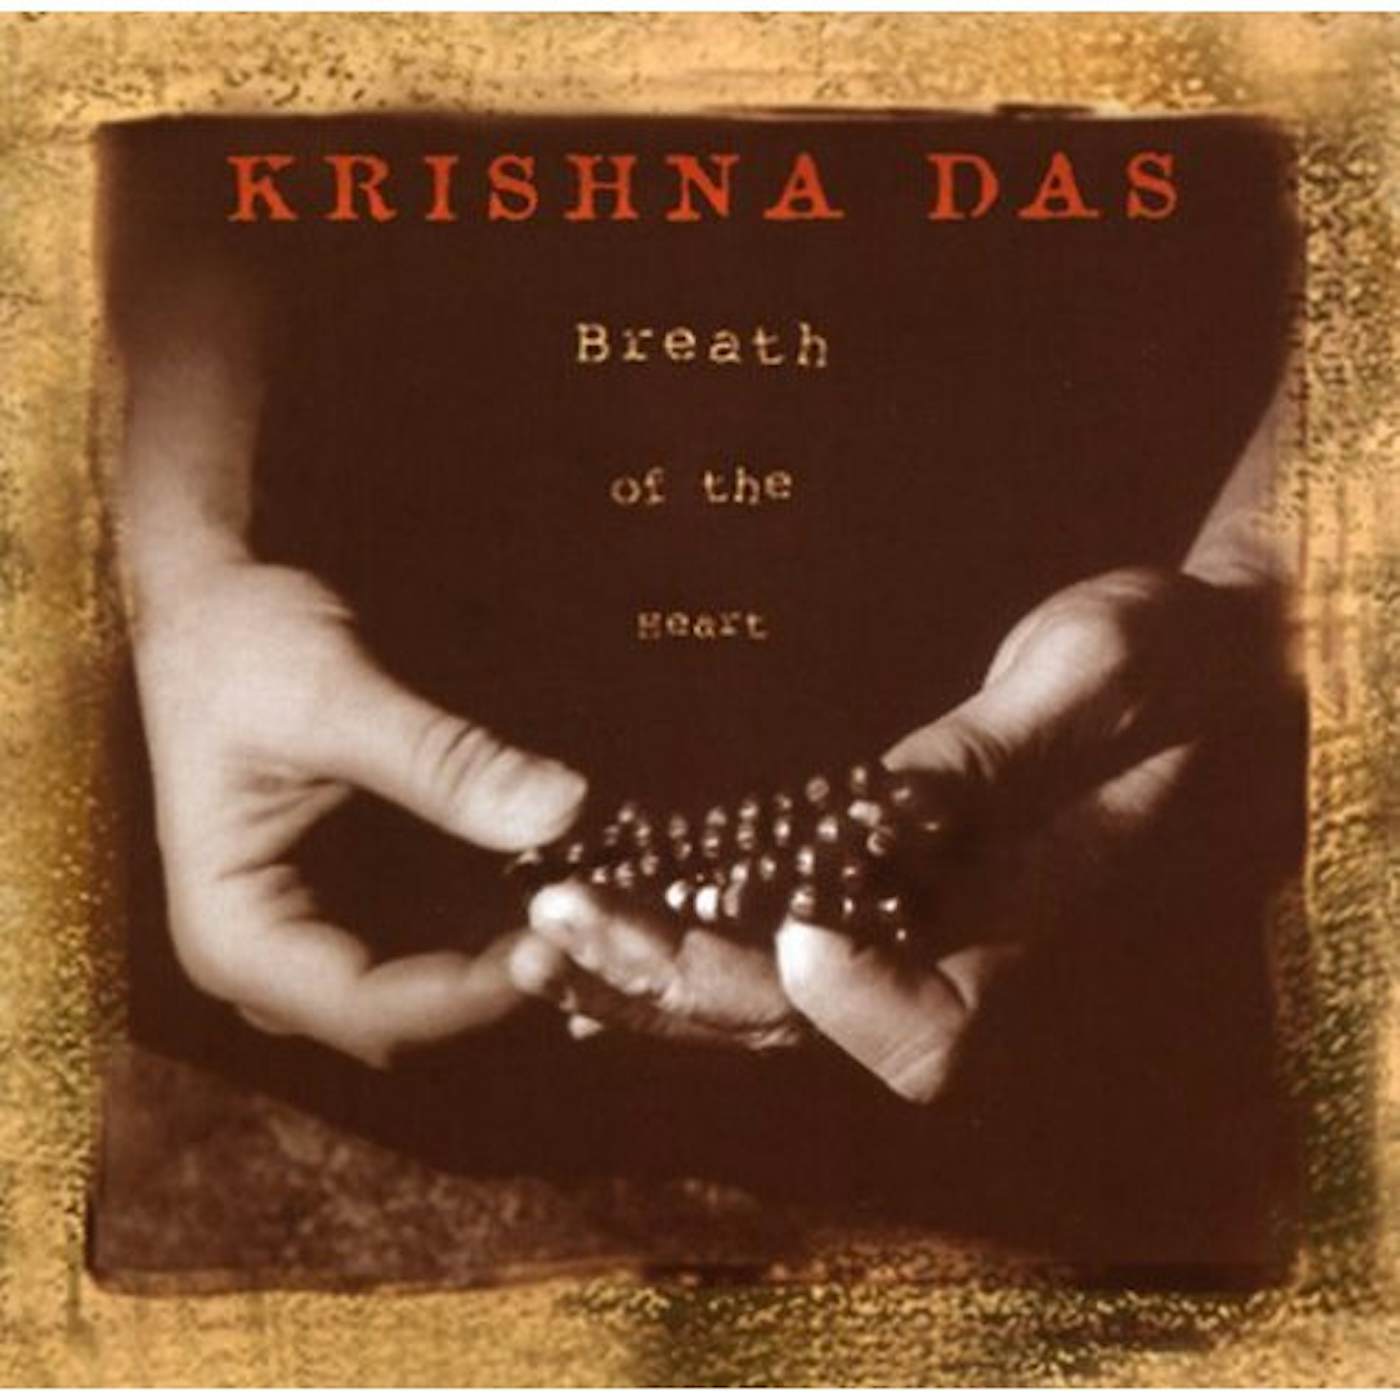 Krishna Das BREATH OF THE HEART CD